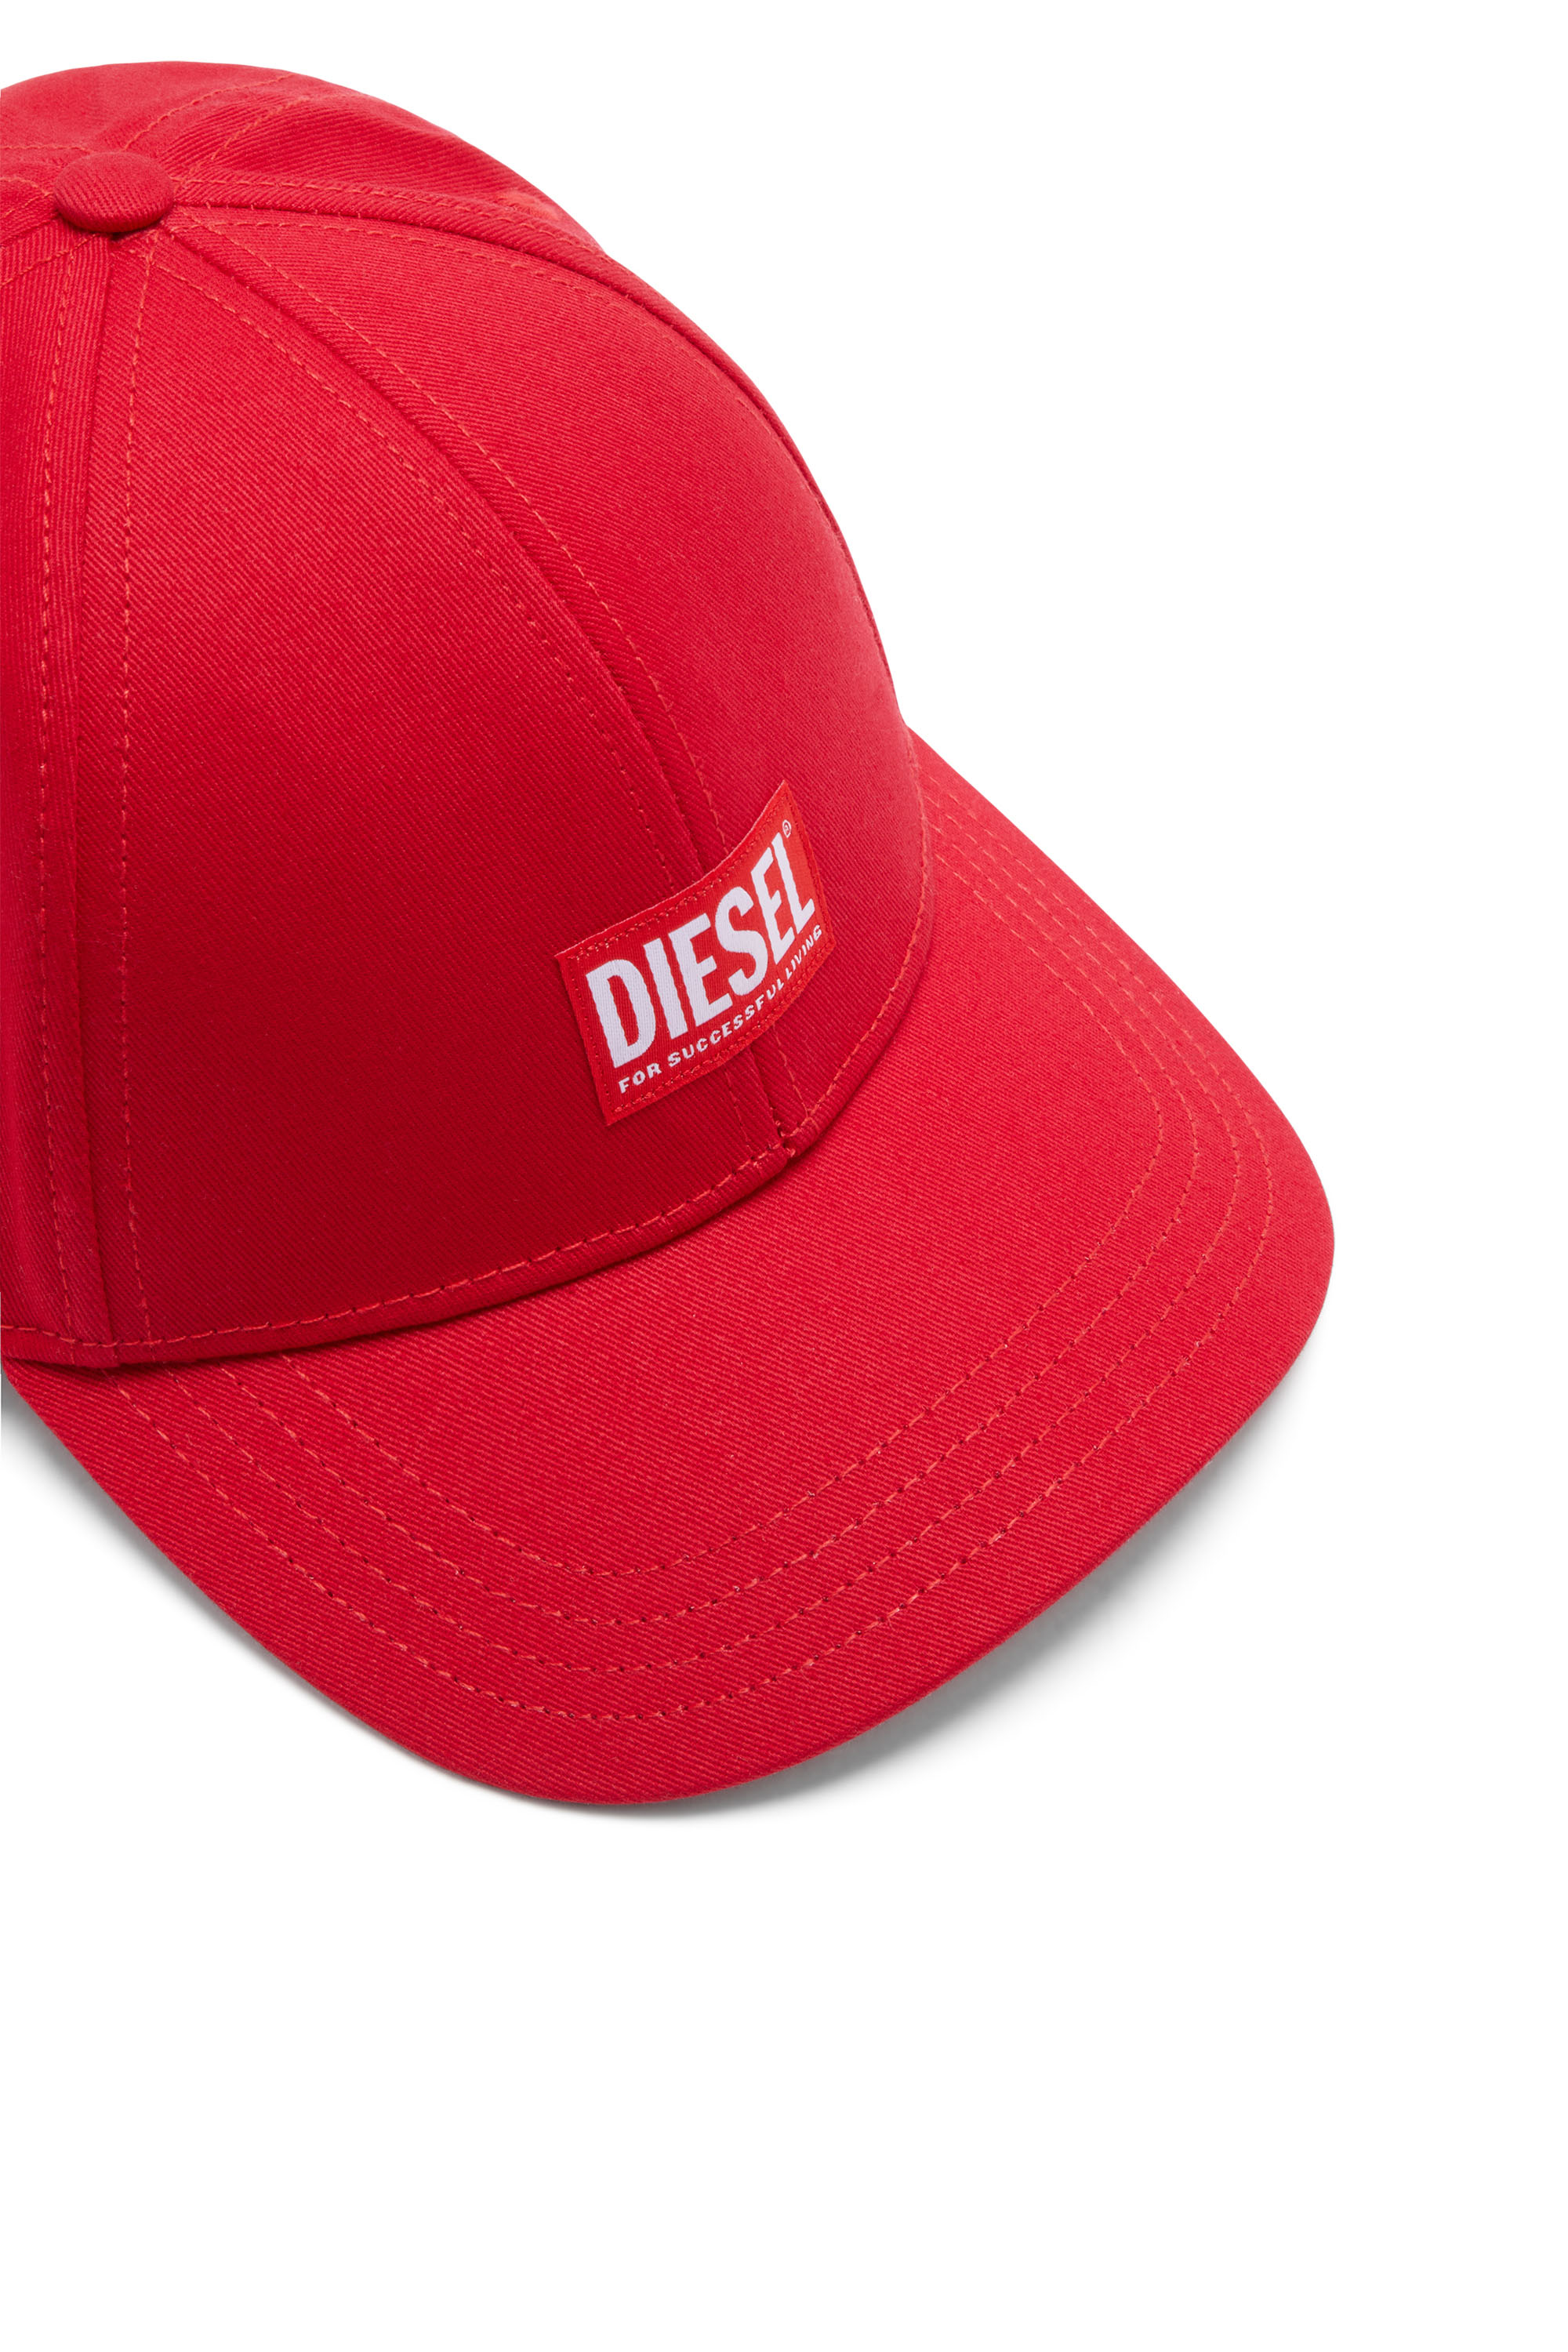 Diesel - CORRY-JACQ, Rojo - Image 3